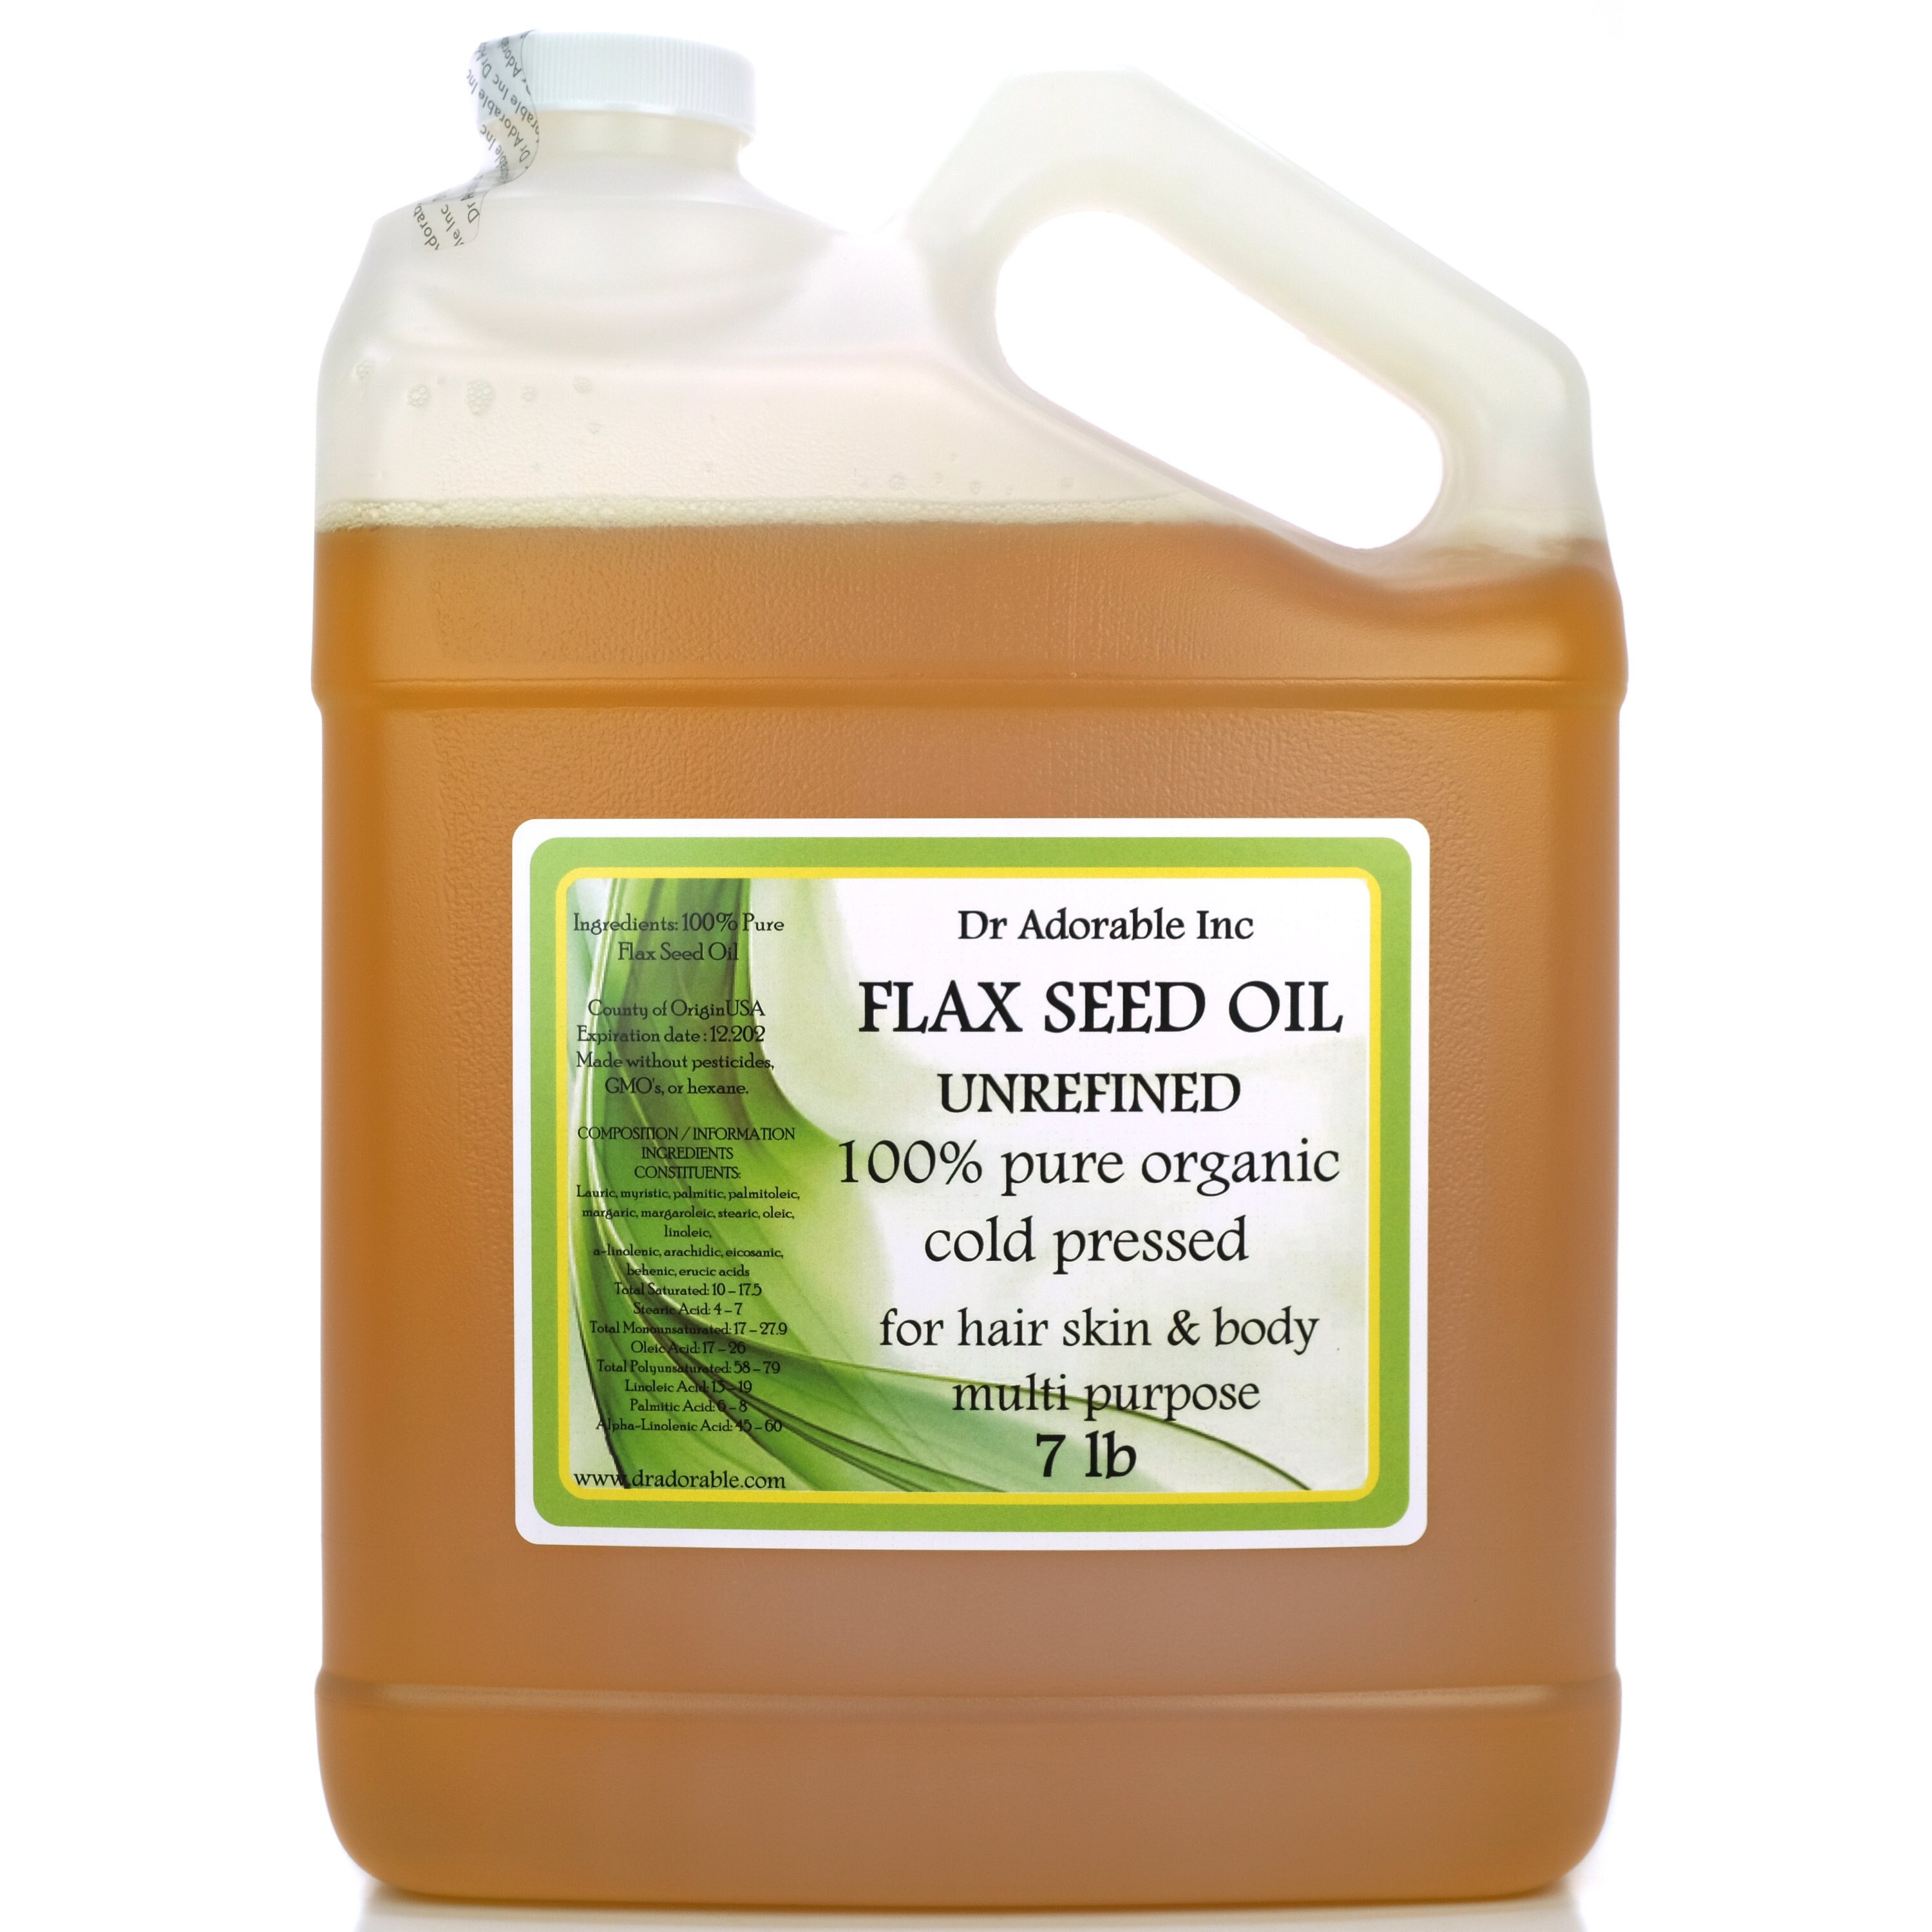 Classikool Raw Linseed Flaxseed Oil, Food Grade & Cold Pressed, Pharma EUR  Grade 